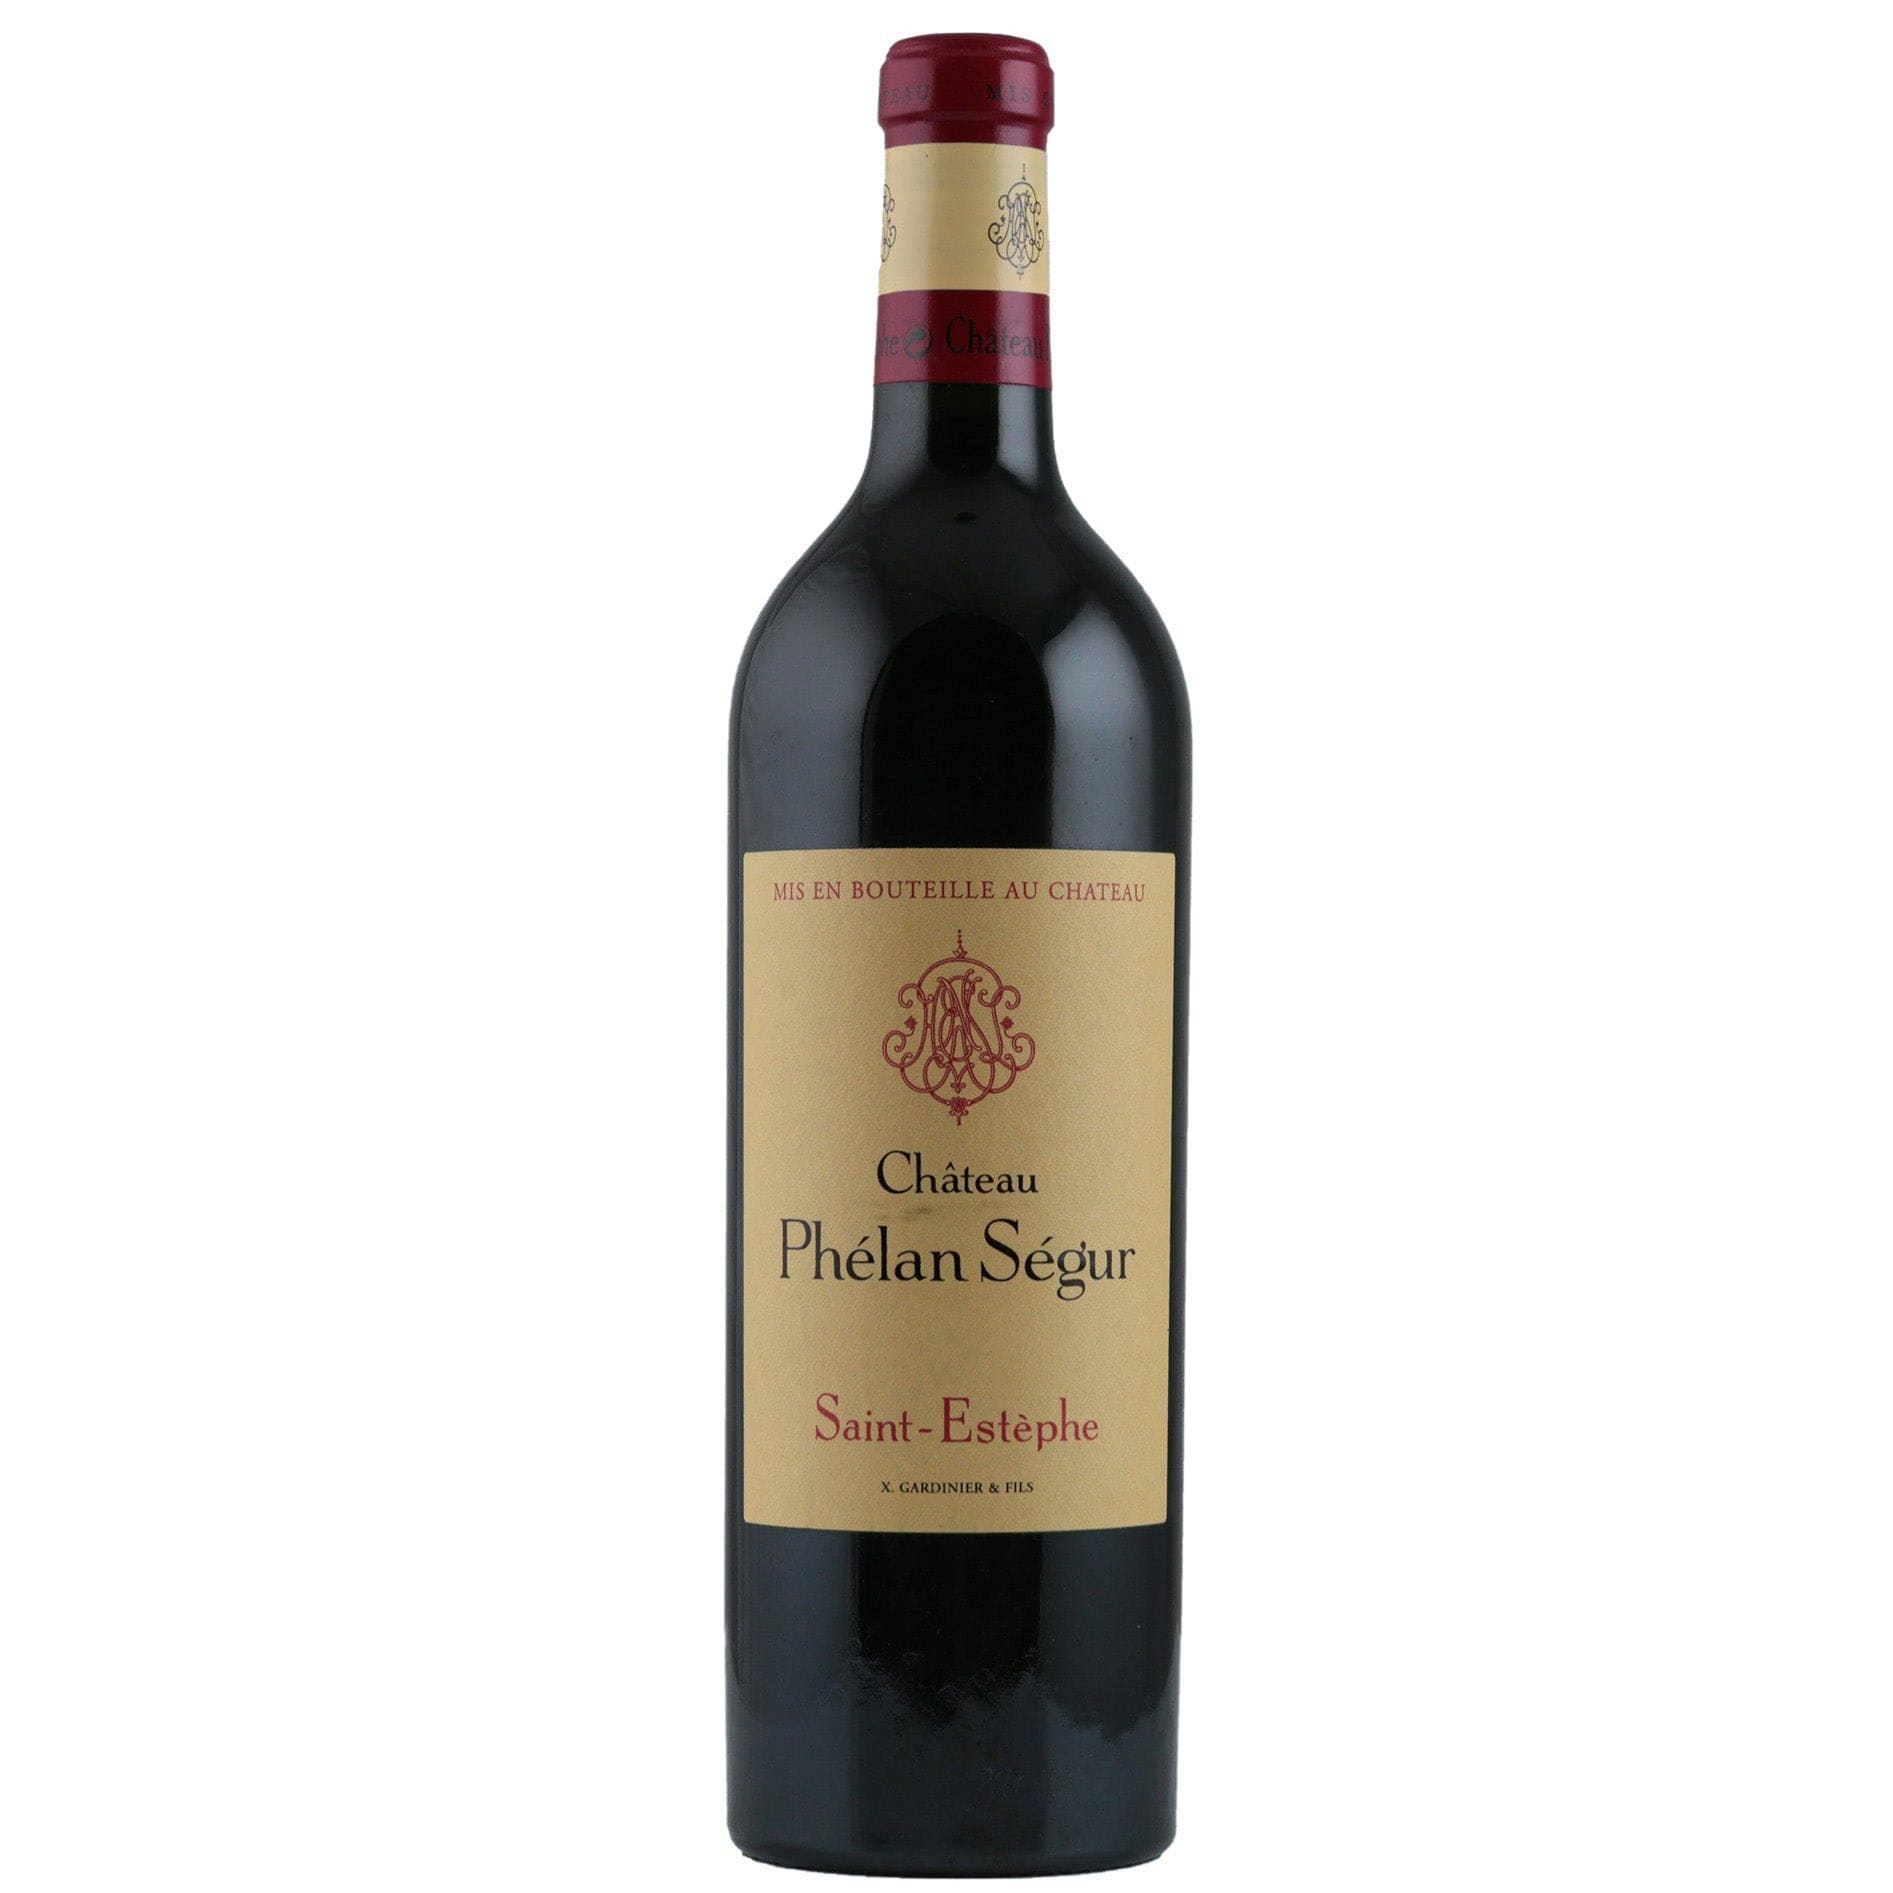 Single bottle of Red wine Ch. Phelan Segur, Grand Vin, Saint-Estephe, 2009 58% Cabernet Sauvignon, 40% Merlot & 2% Cabernet Franc